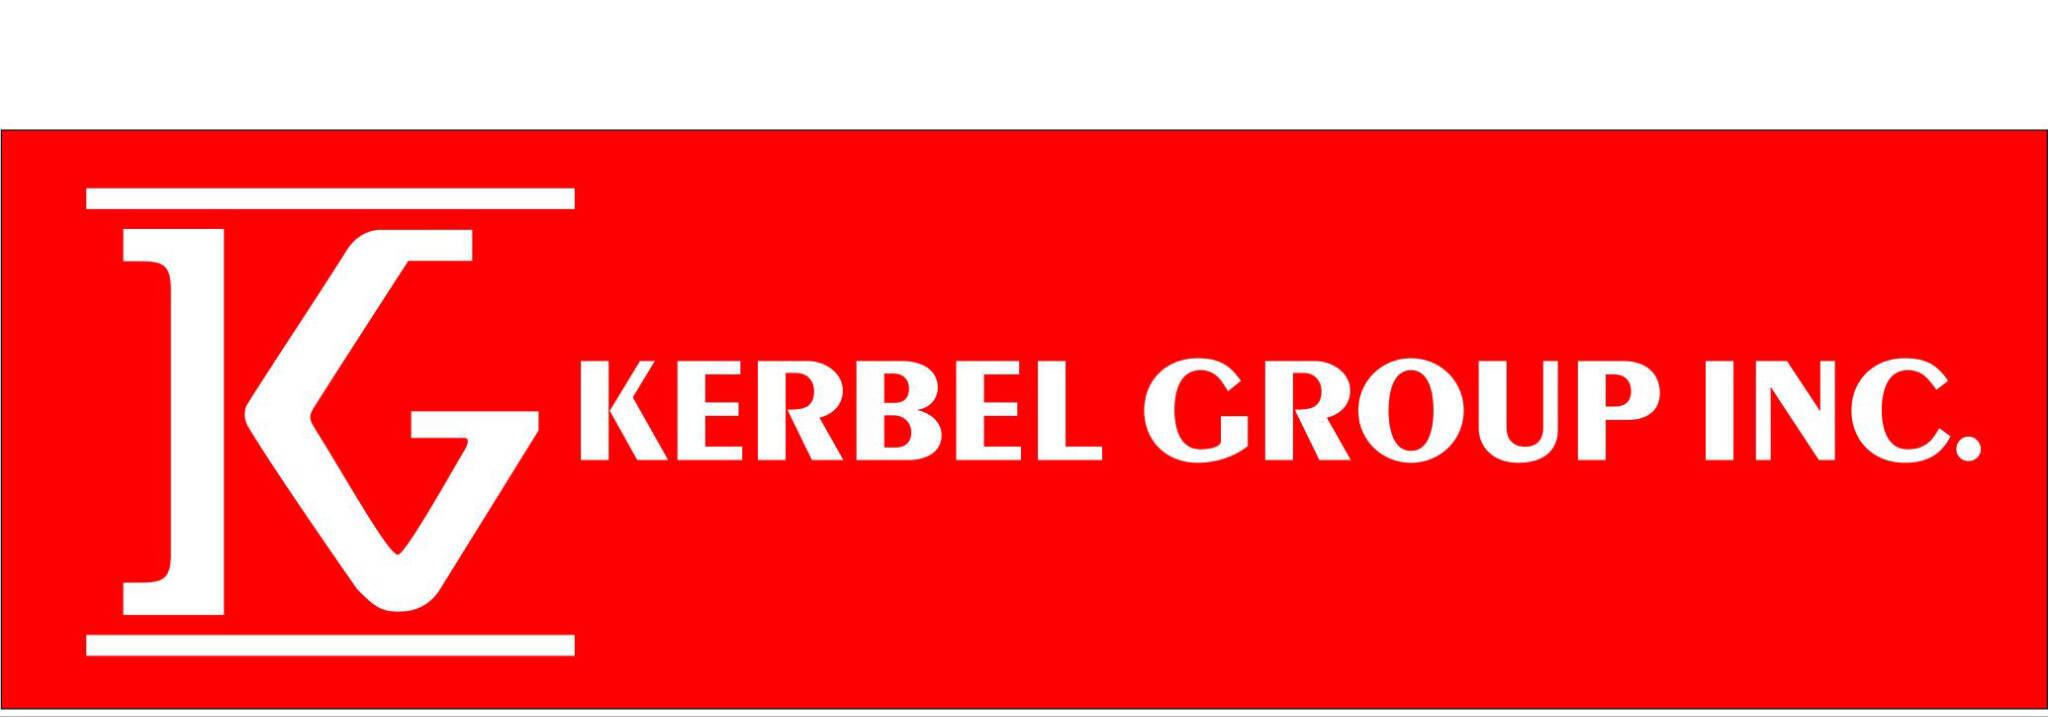 Kerbel Group Inc